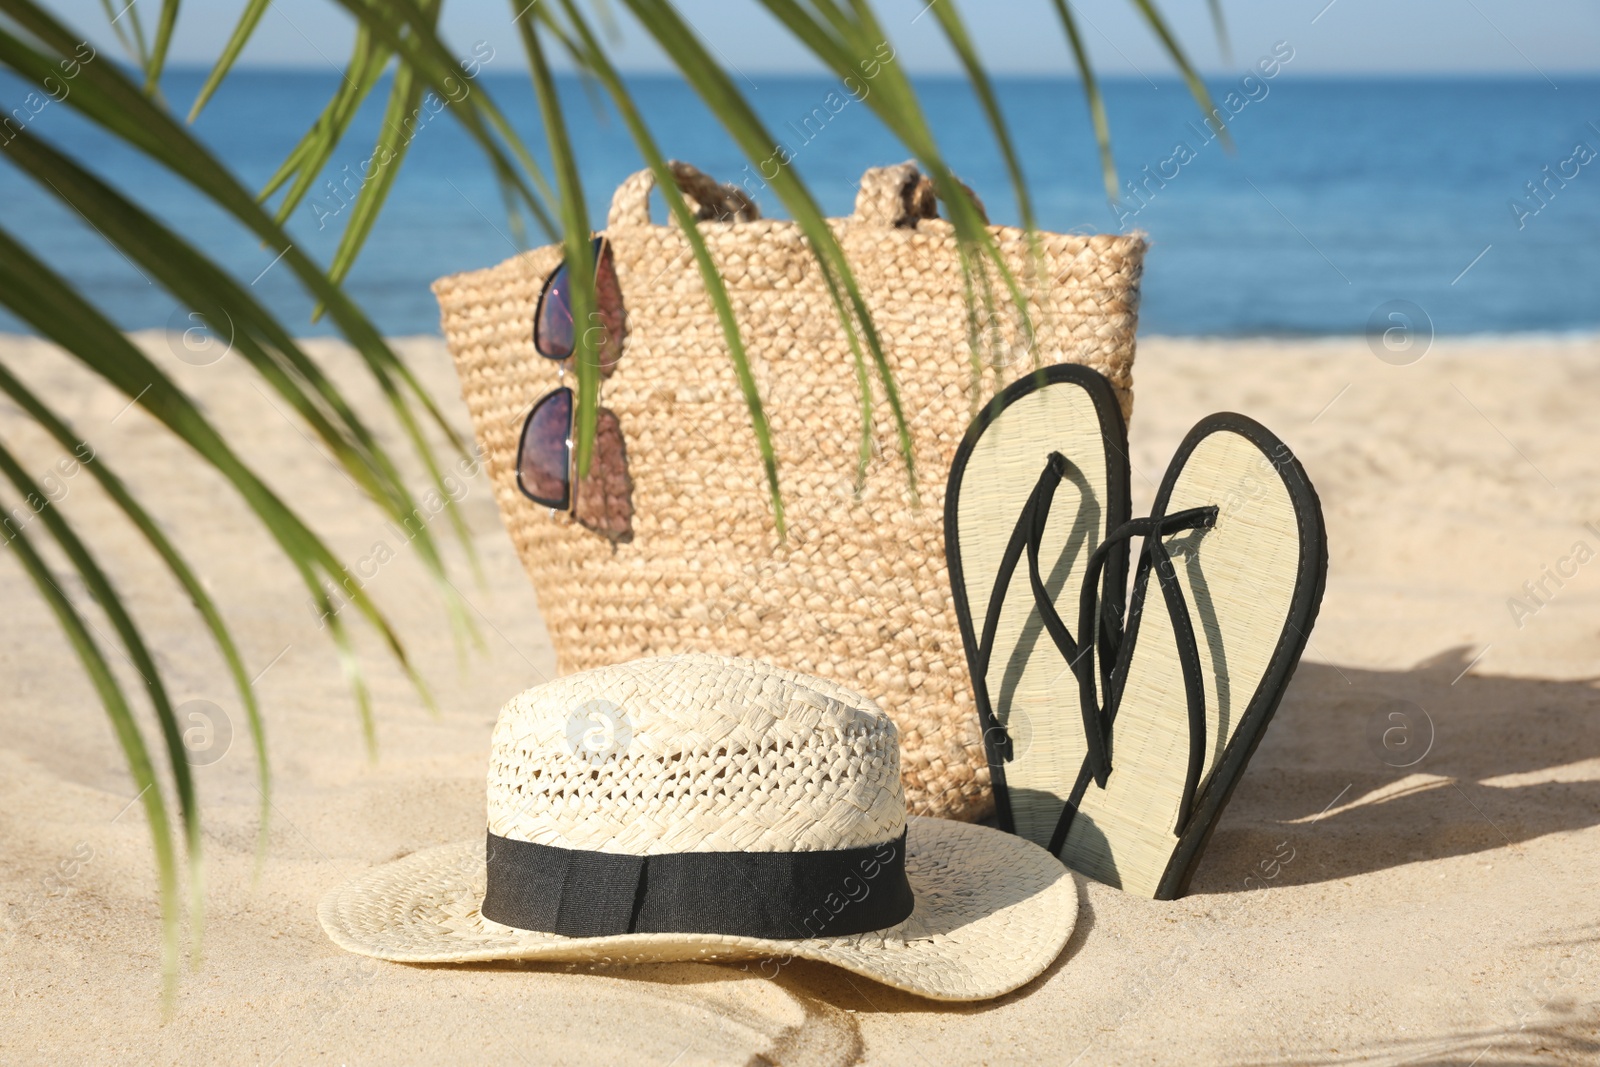 Photo of Stylish beach accessories on sandy sea shore